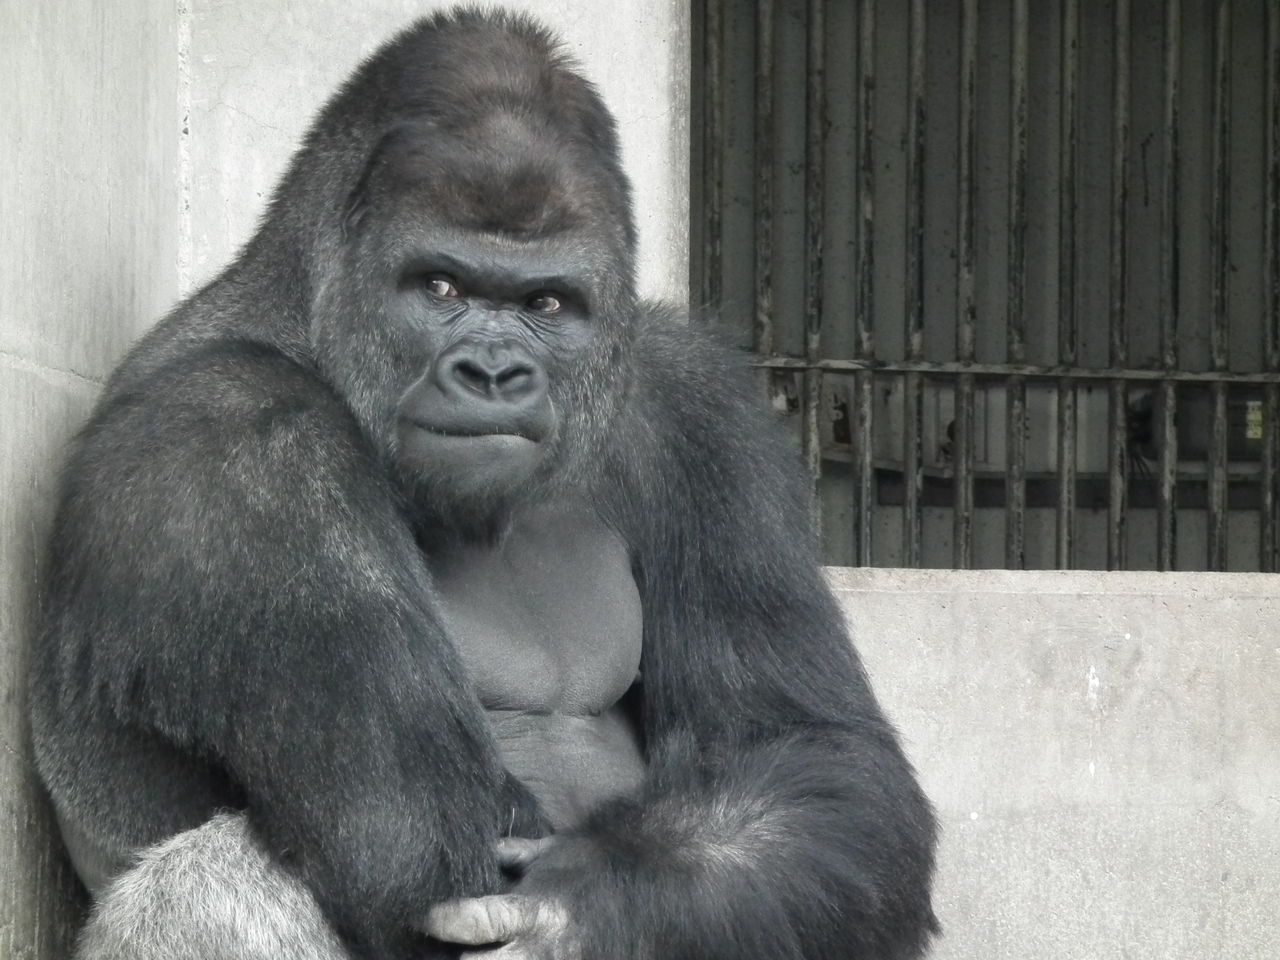 Chest-Beating Gorillas Don’t Bluff: Honest Signal of True Body Size